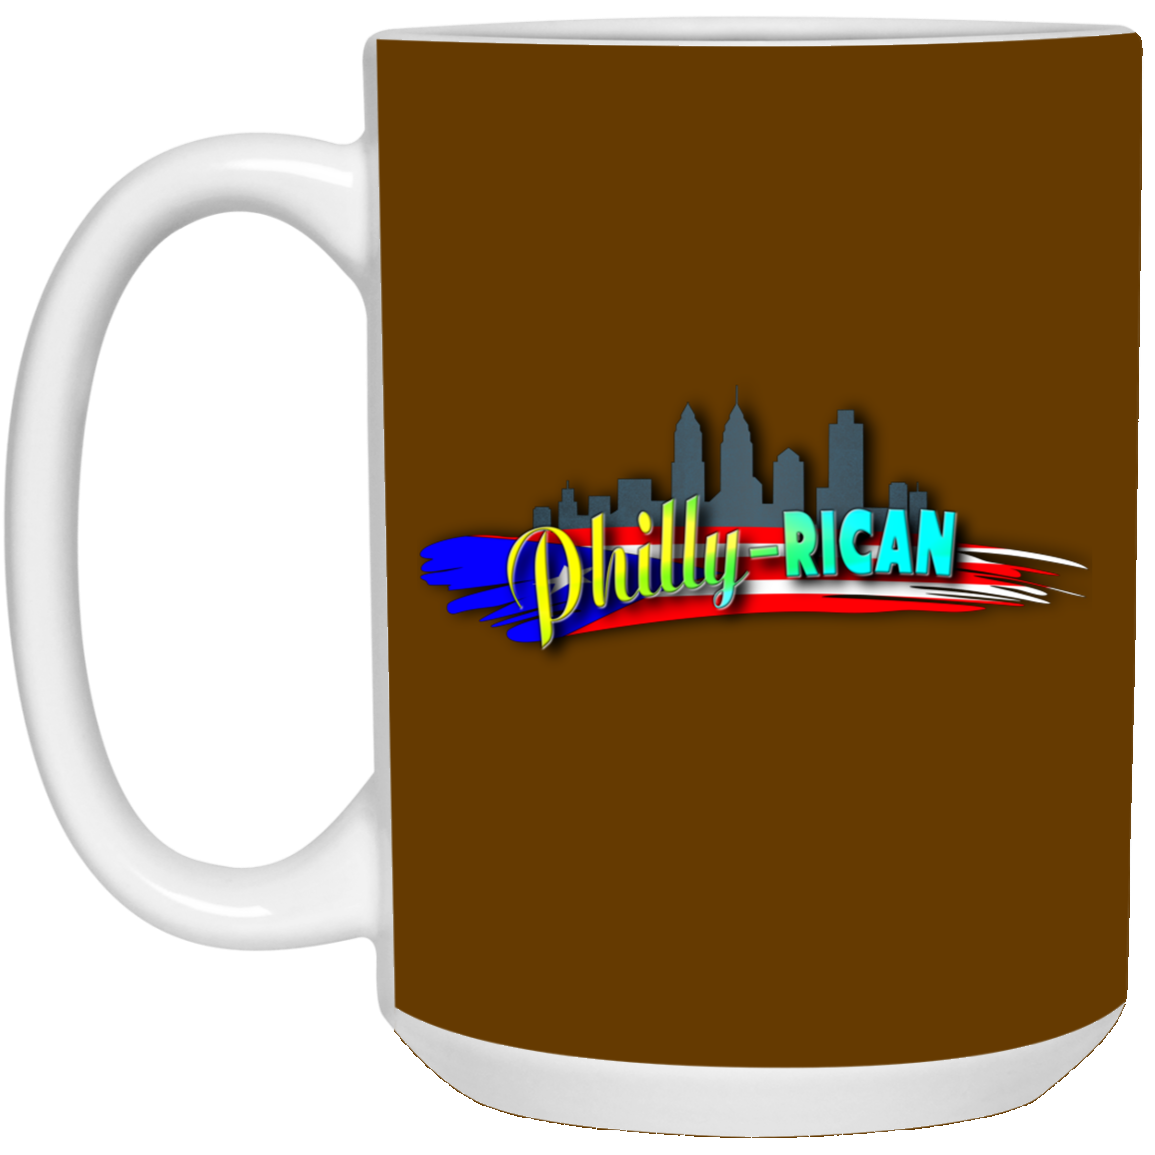 Philly-Rican 15 oz. White Mug - Puerto Rican Pride